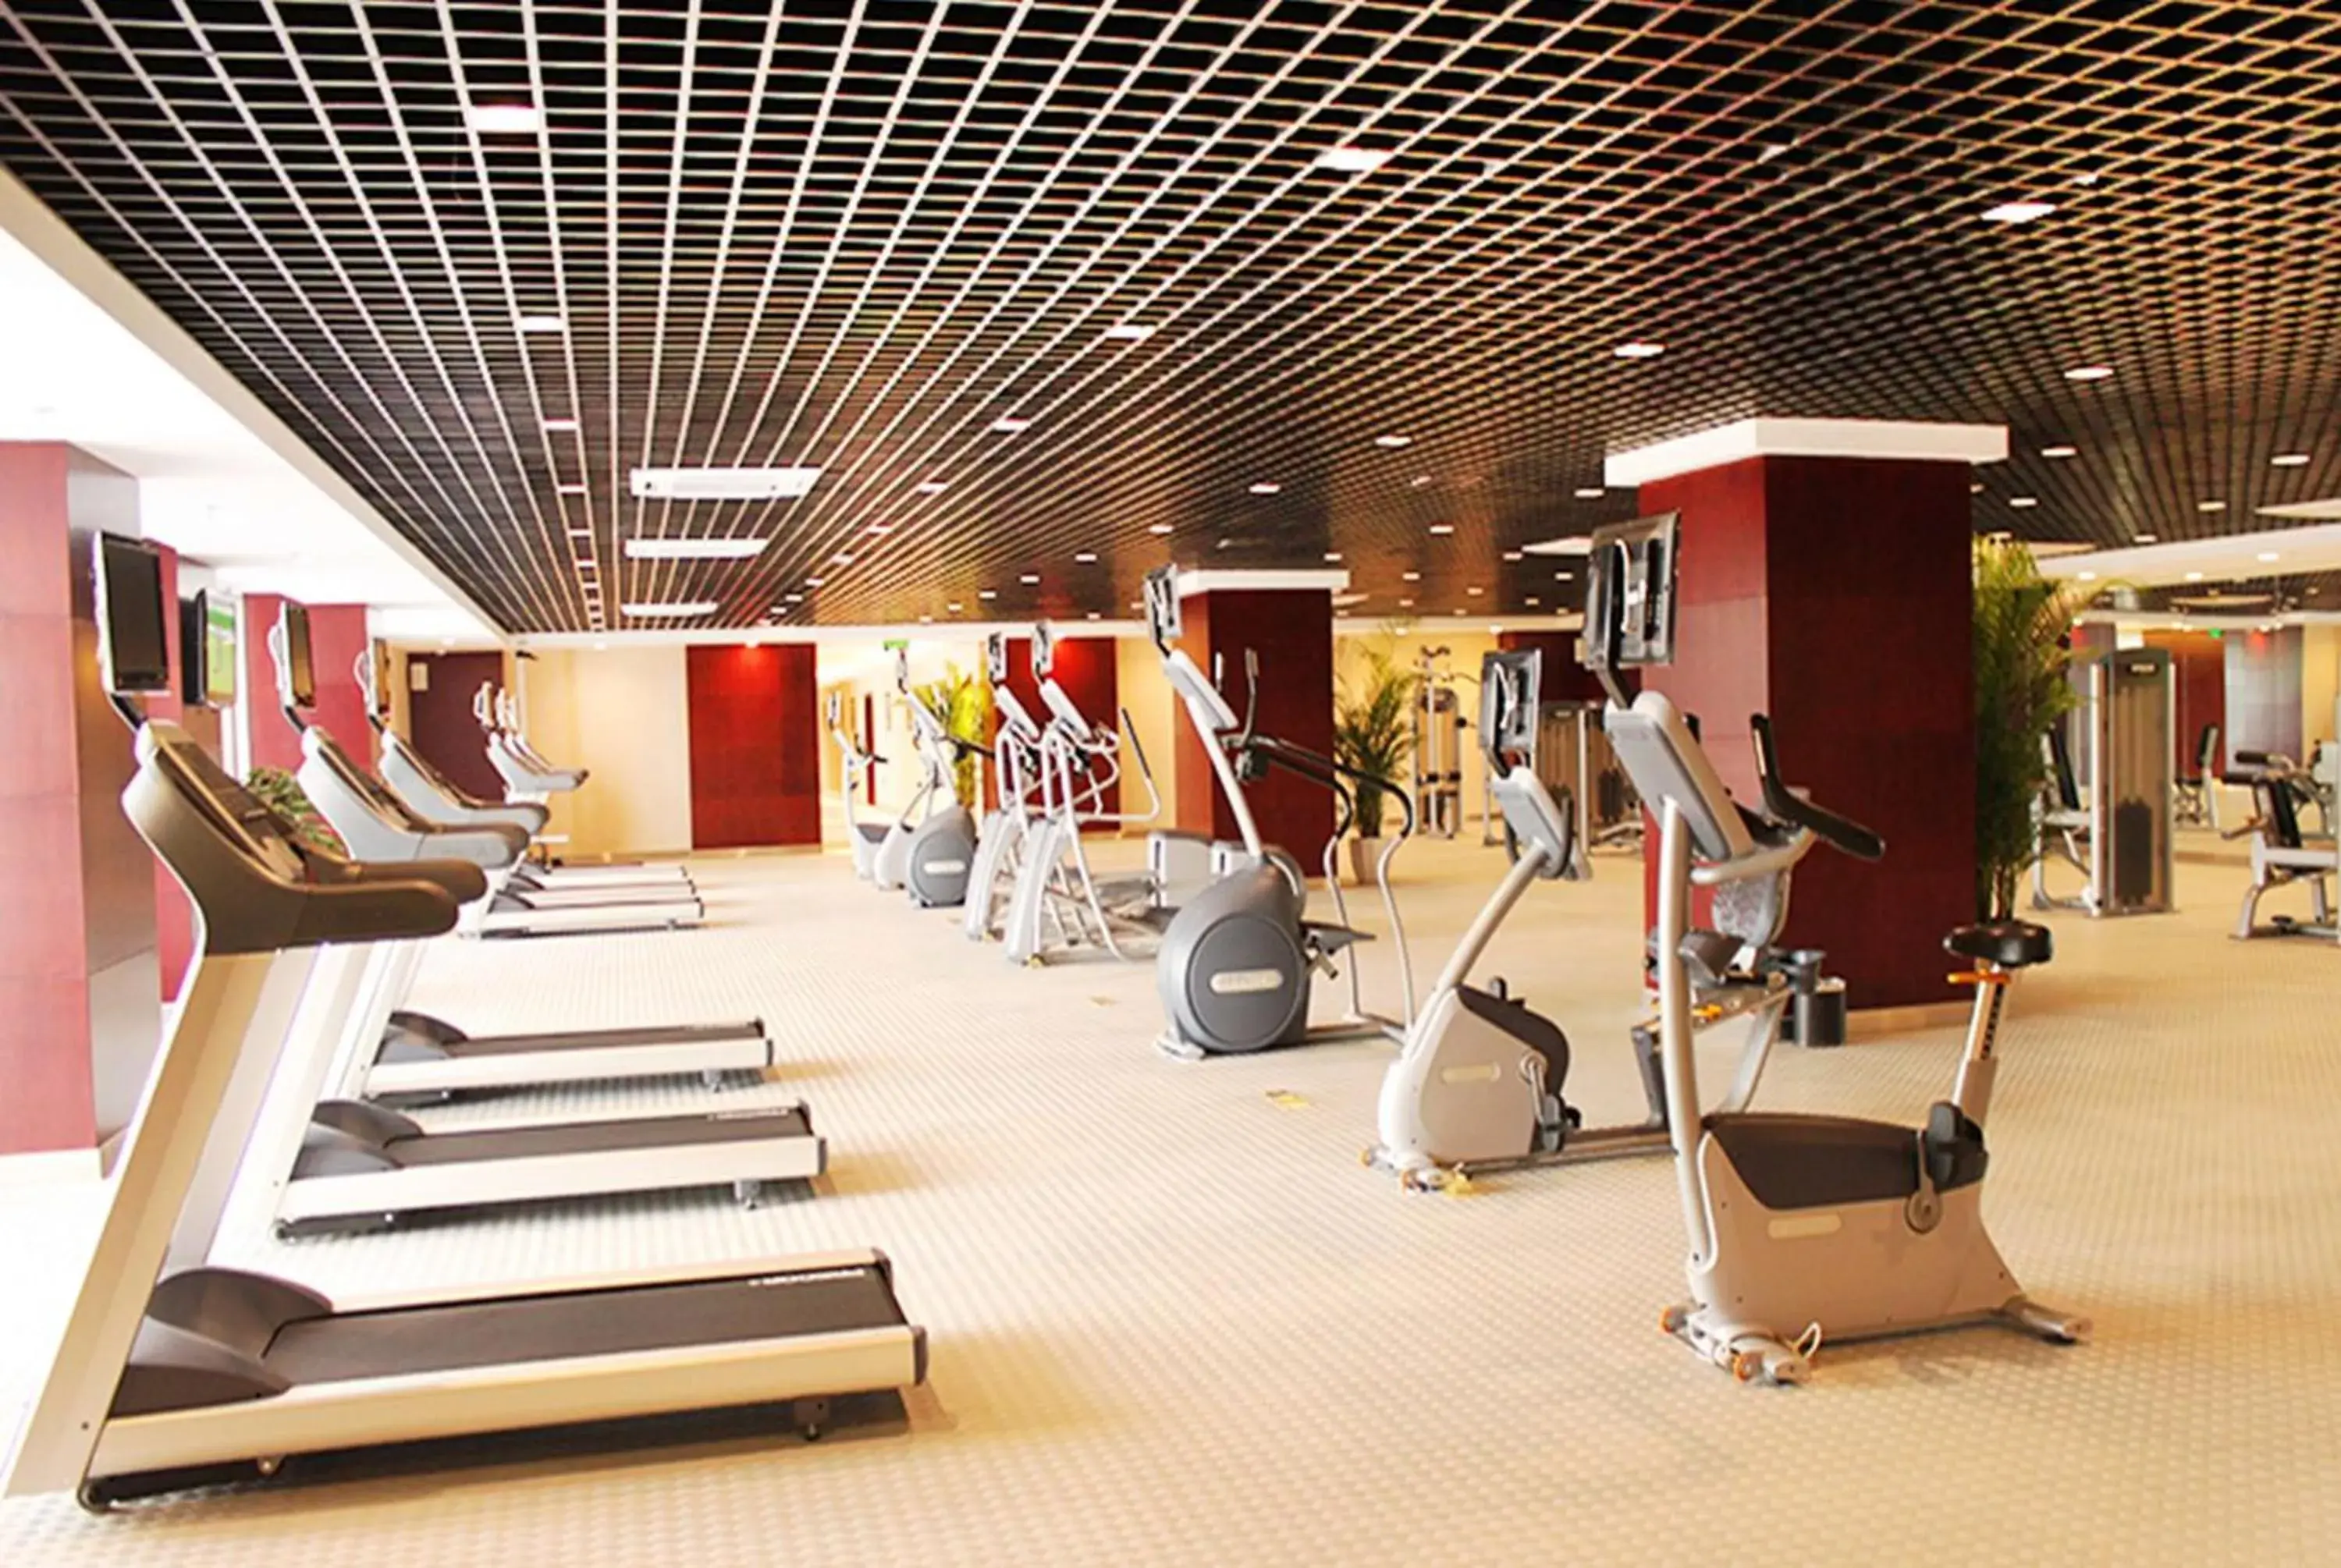 Fitness centre/facilities, Fitness Center/Facilities in Howard Johnson Tropical Garden Plaza Kunming